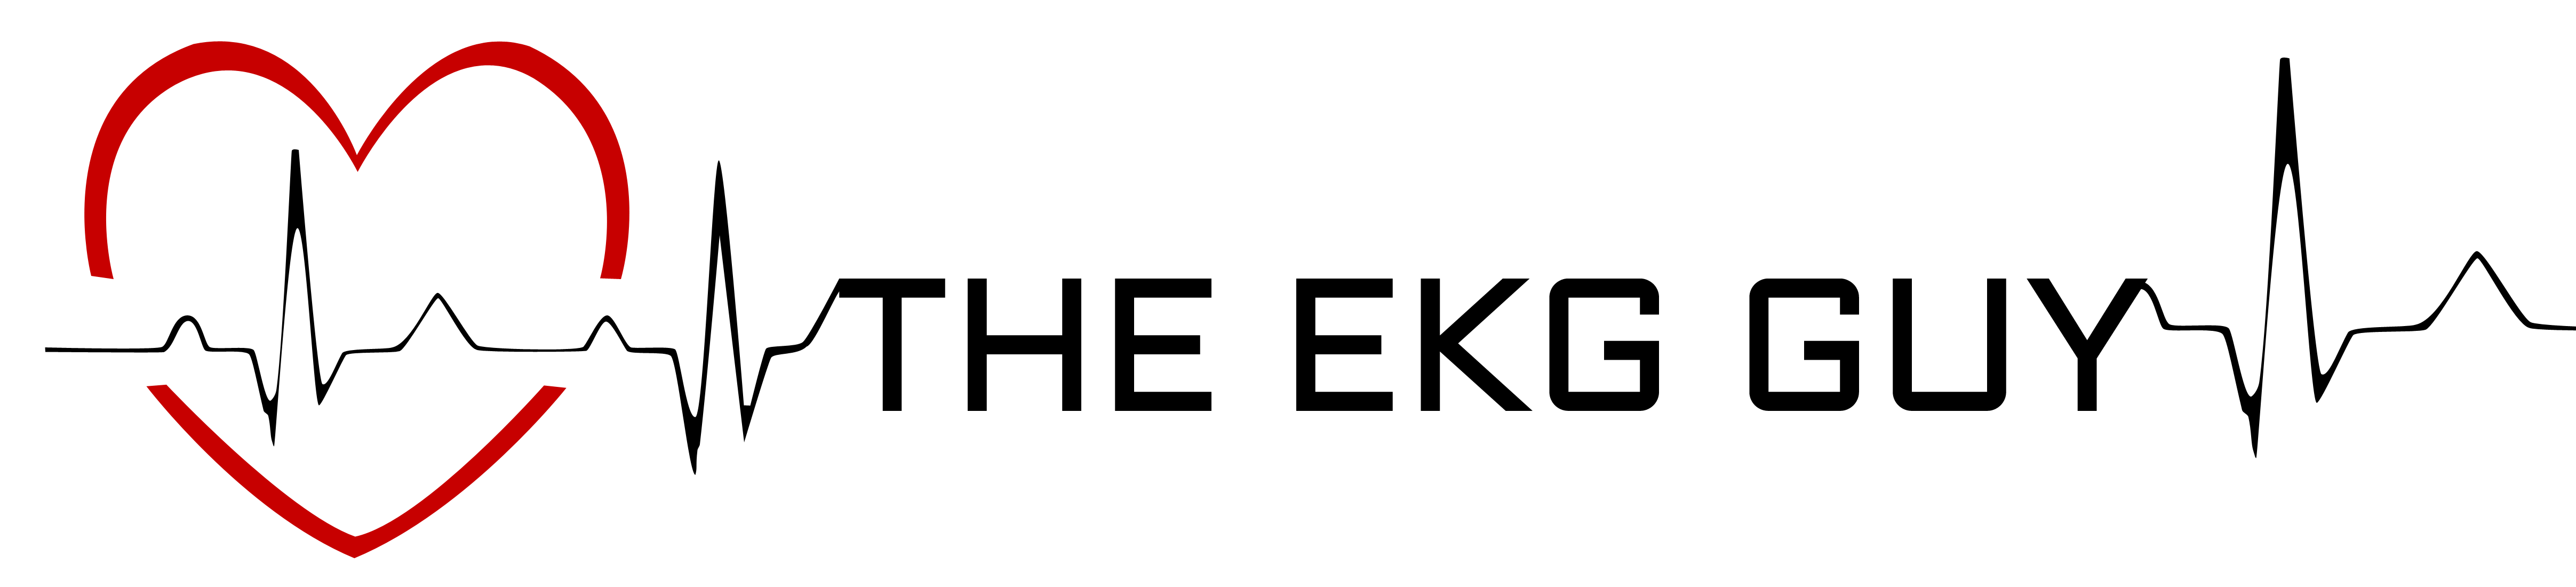 The EKG Guy logo